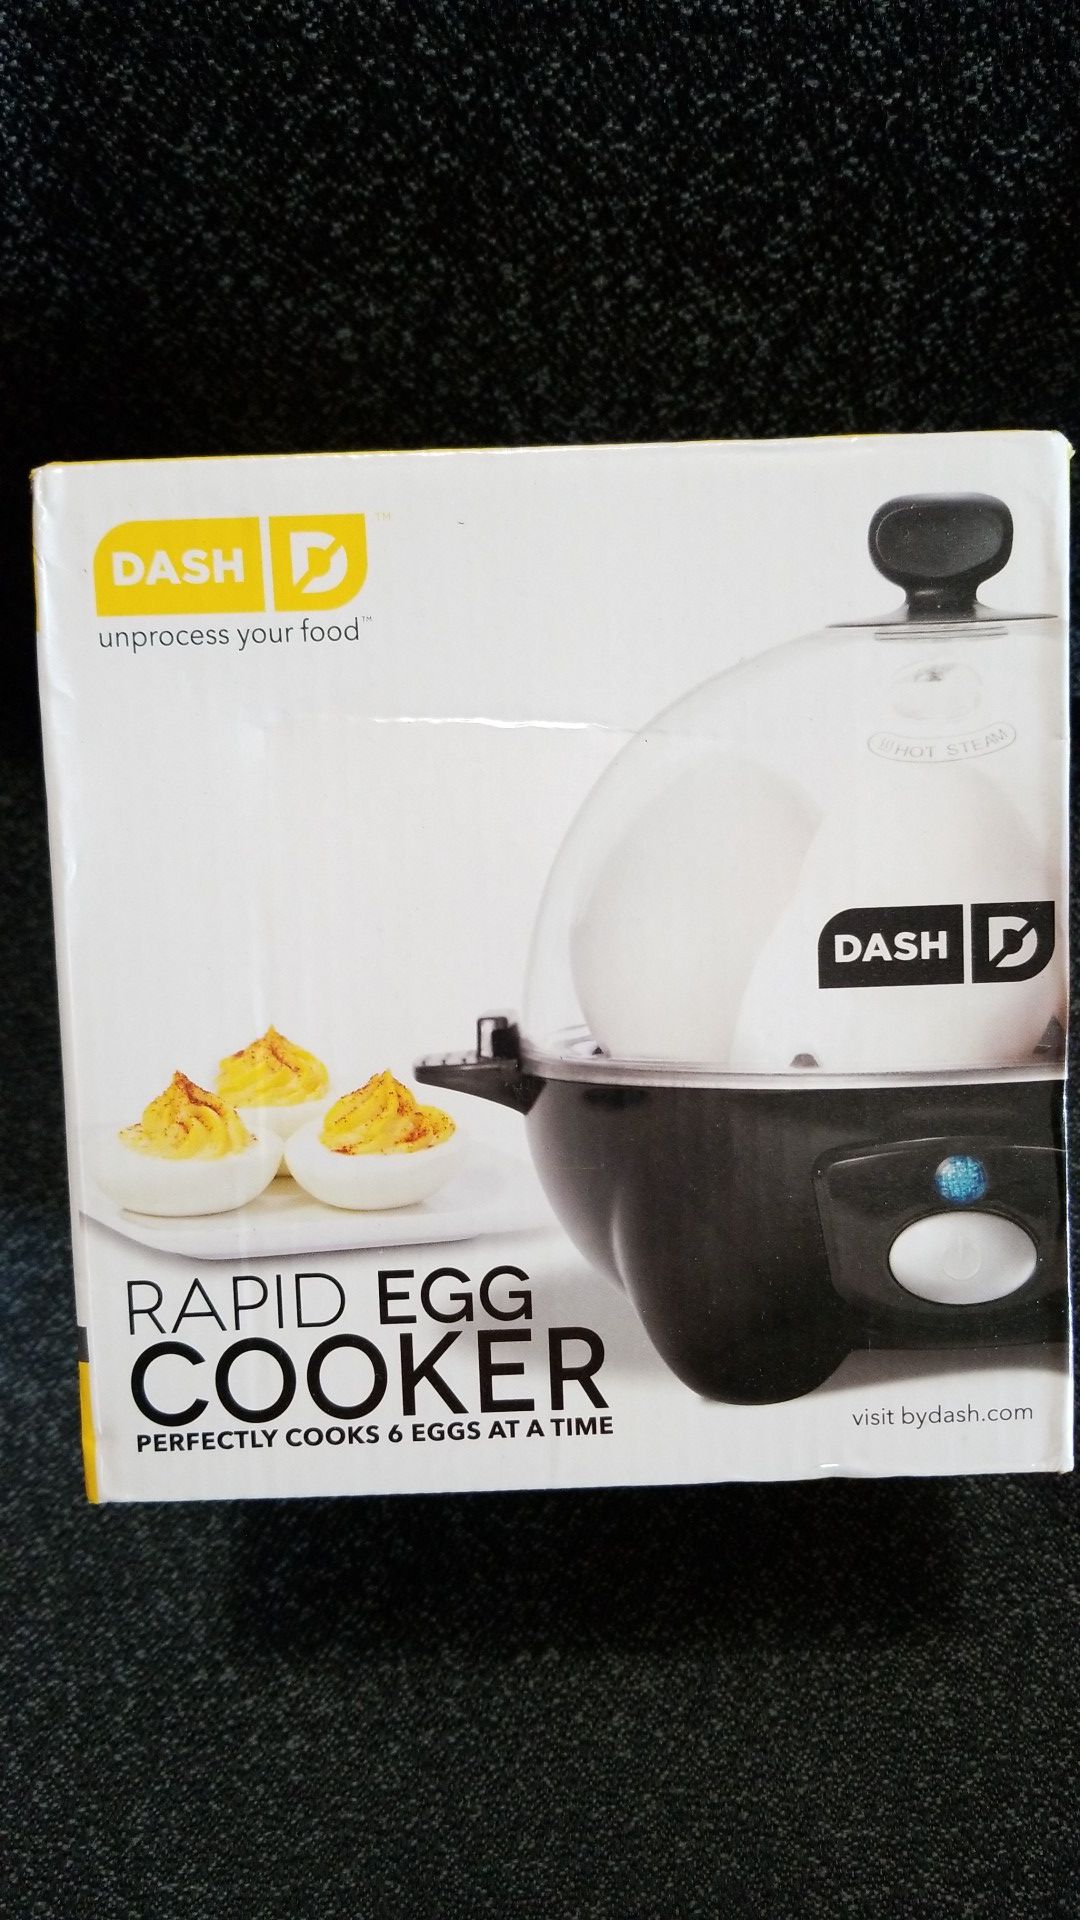 Rapid egg cooker